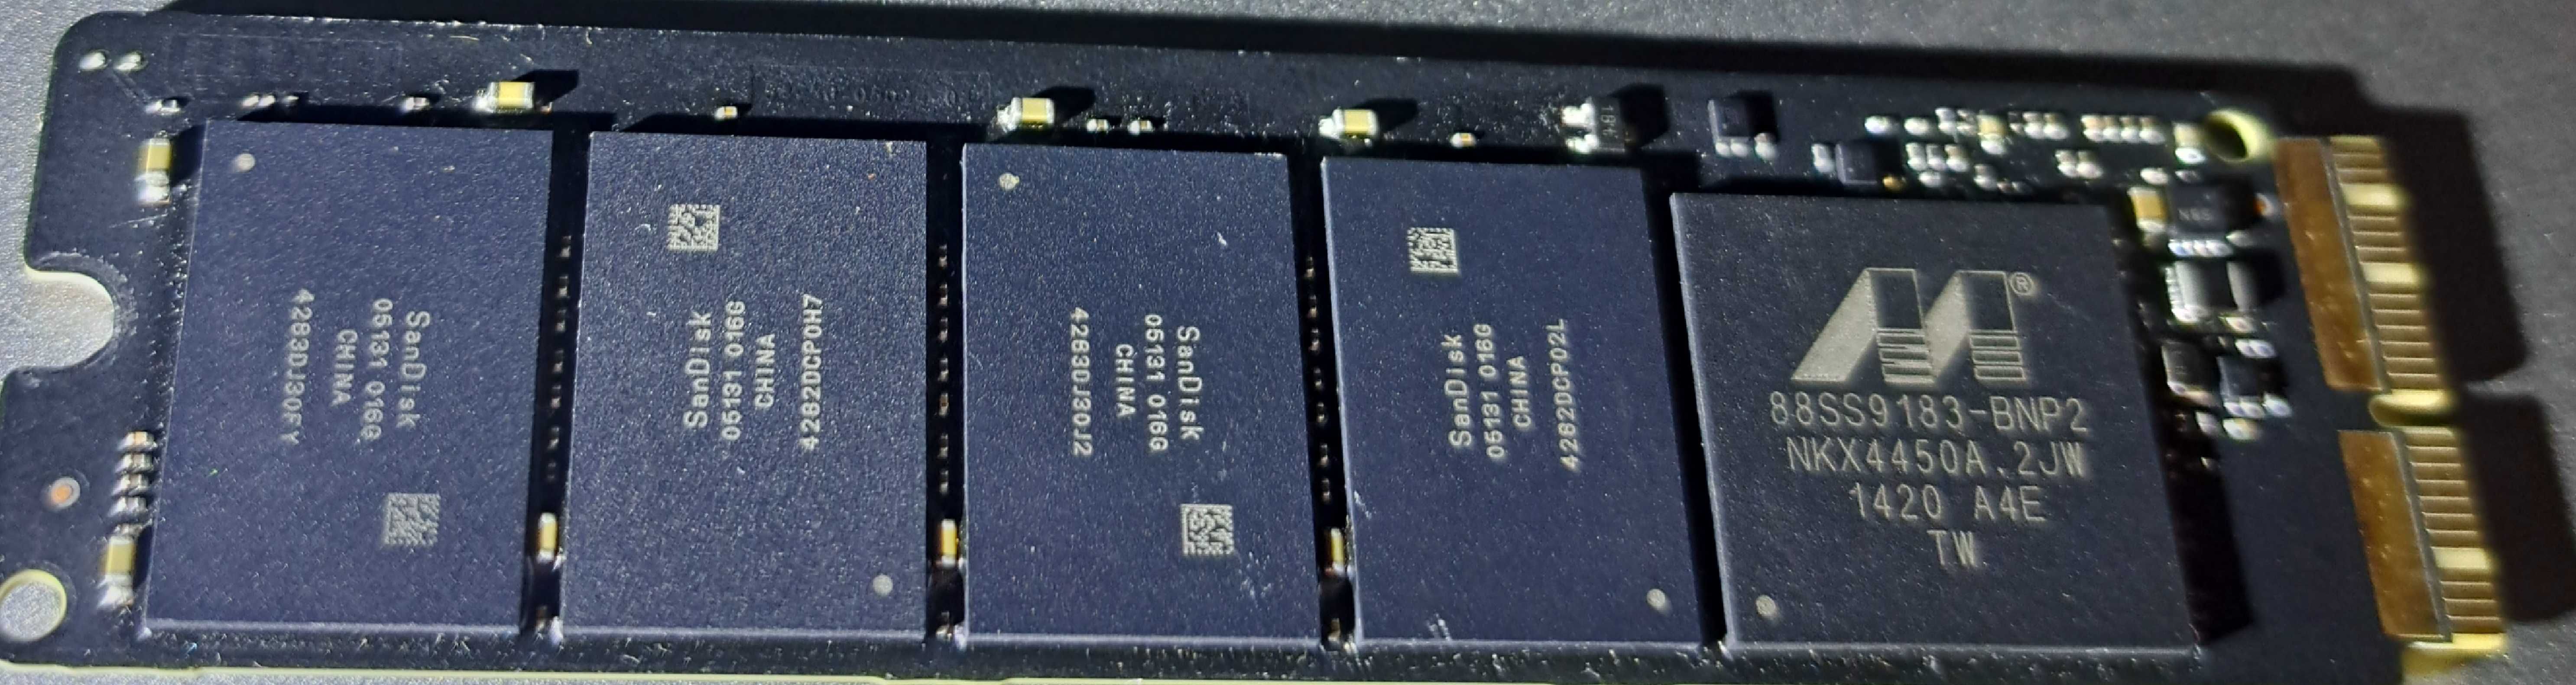 Dysk SDD SanDisk M.2 PCIE 128GB